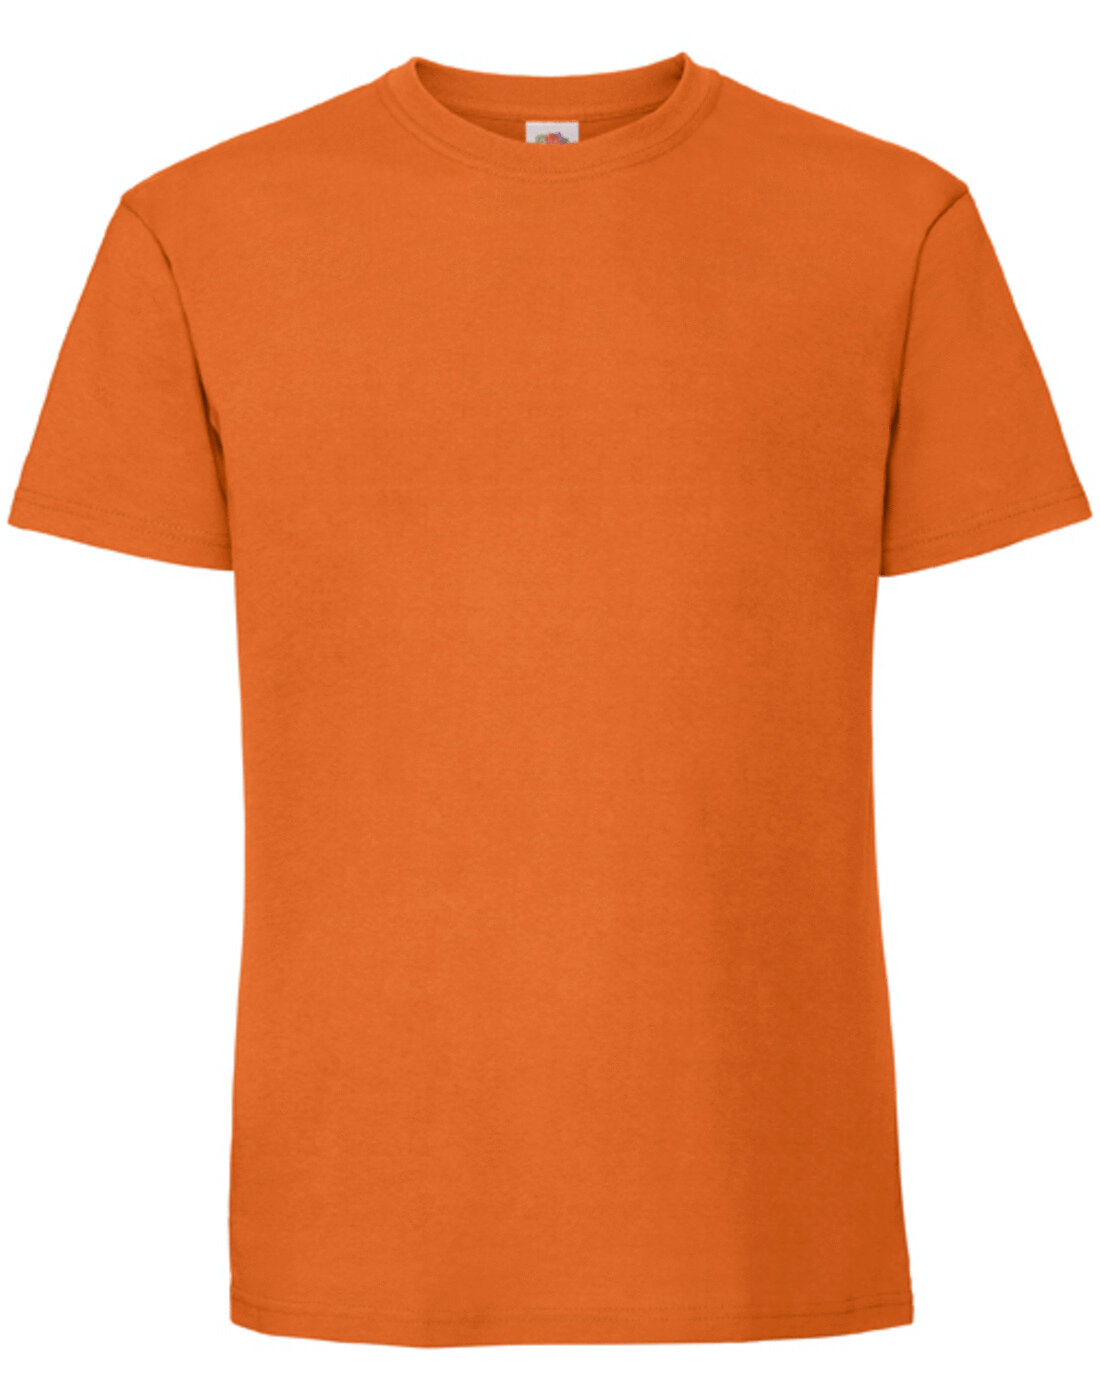 Fruit of the Loom Mens Ringspun Premium T-Shirt - Orange